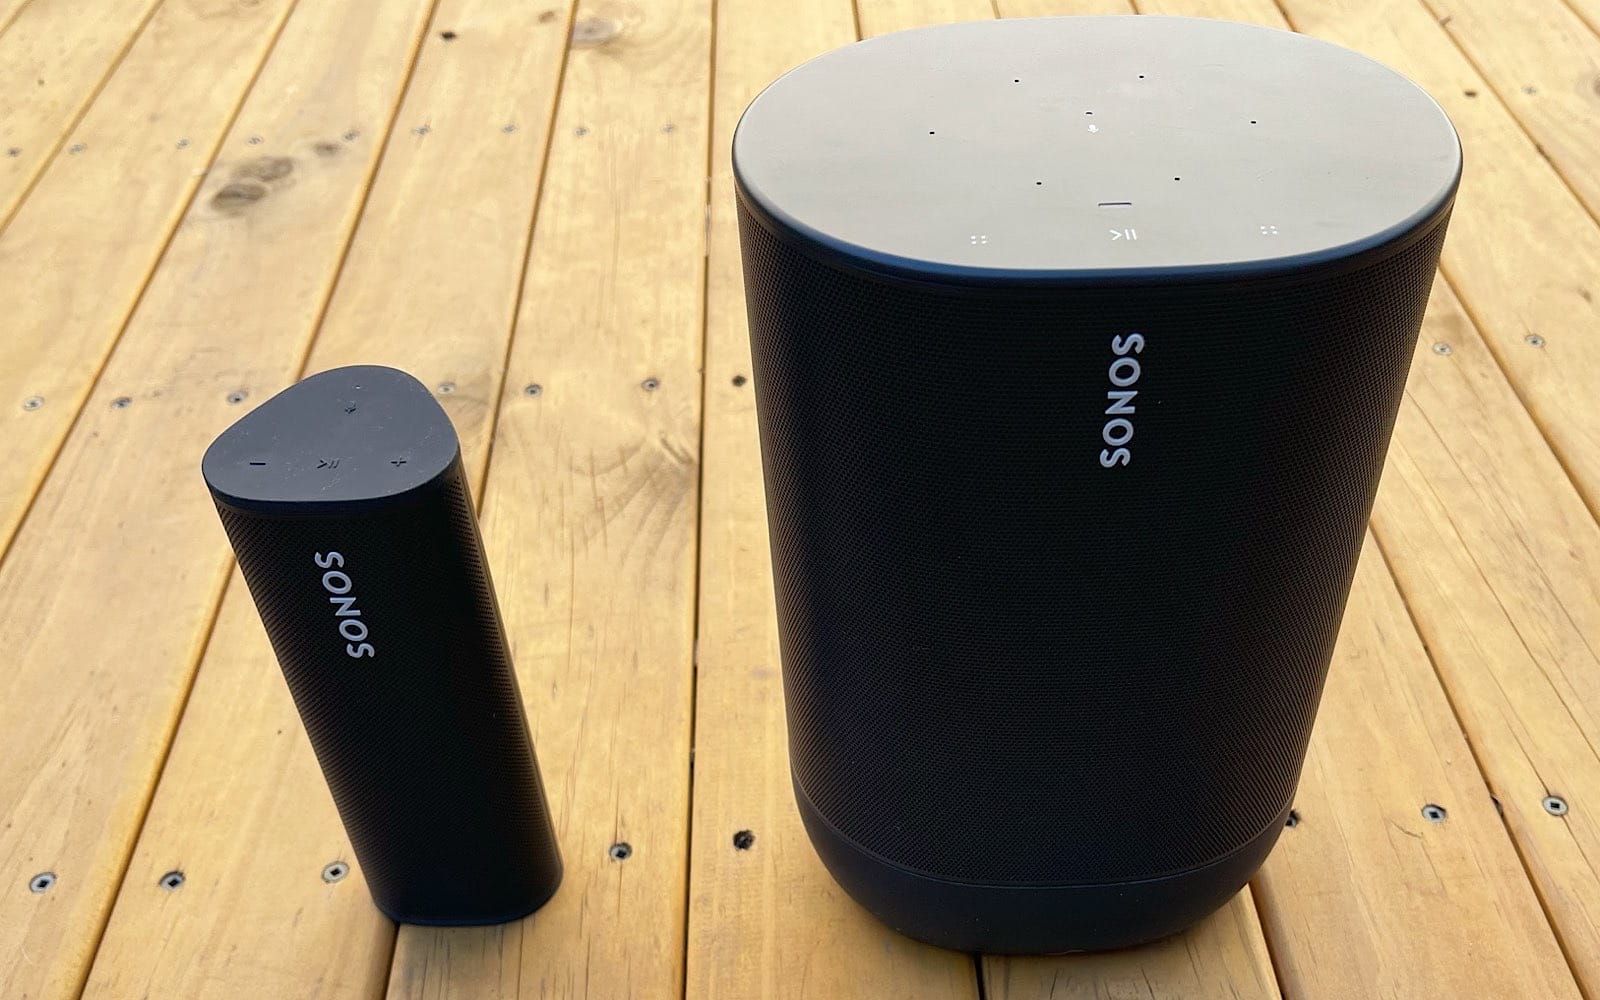 Sonos Roam (left) and Sonos Move (right)